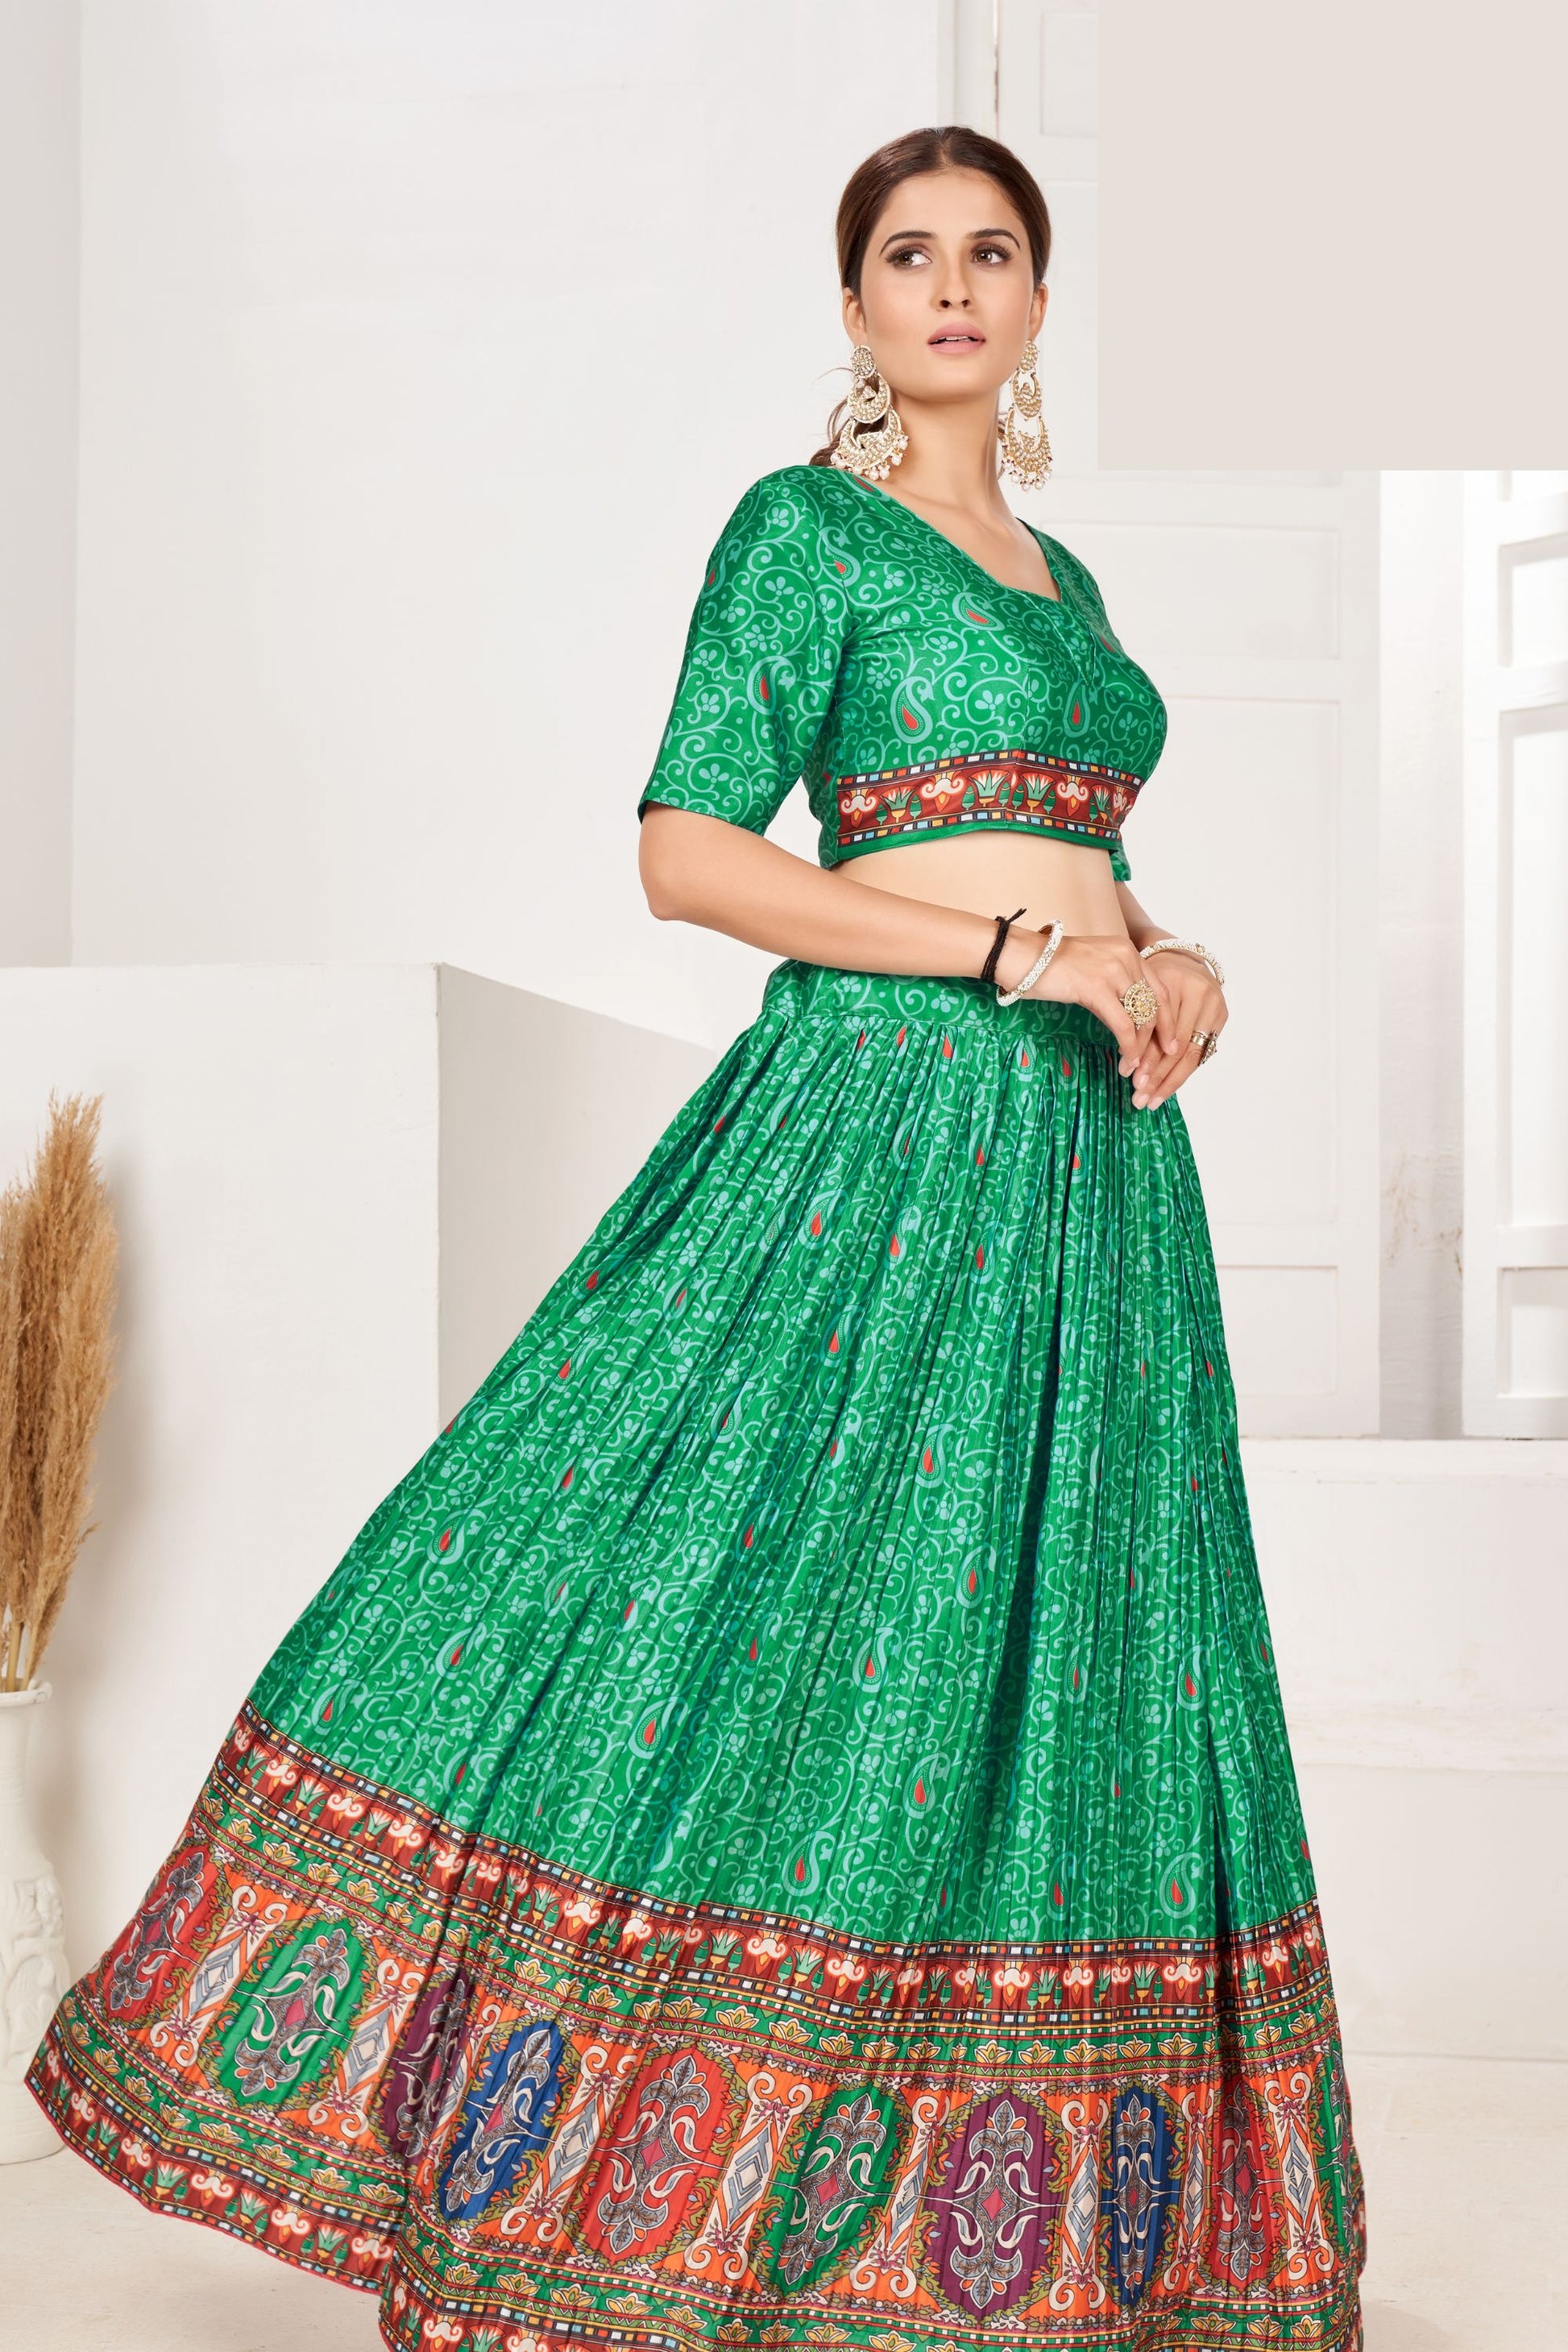 Green Pakistani Crepe Printed Lehenga Choli For Indian Festivals & Weddings - Print Work,